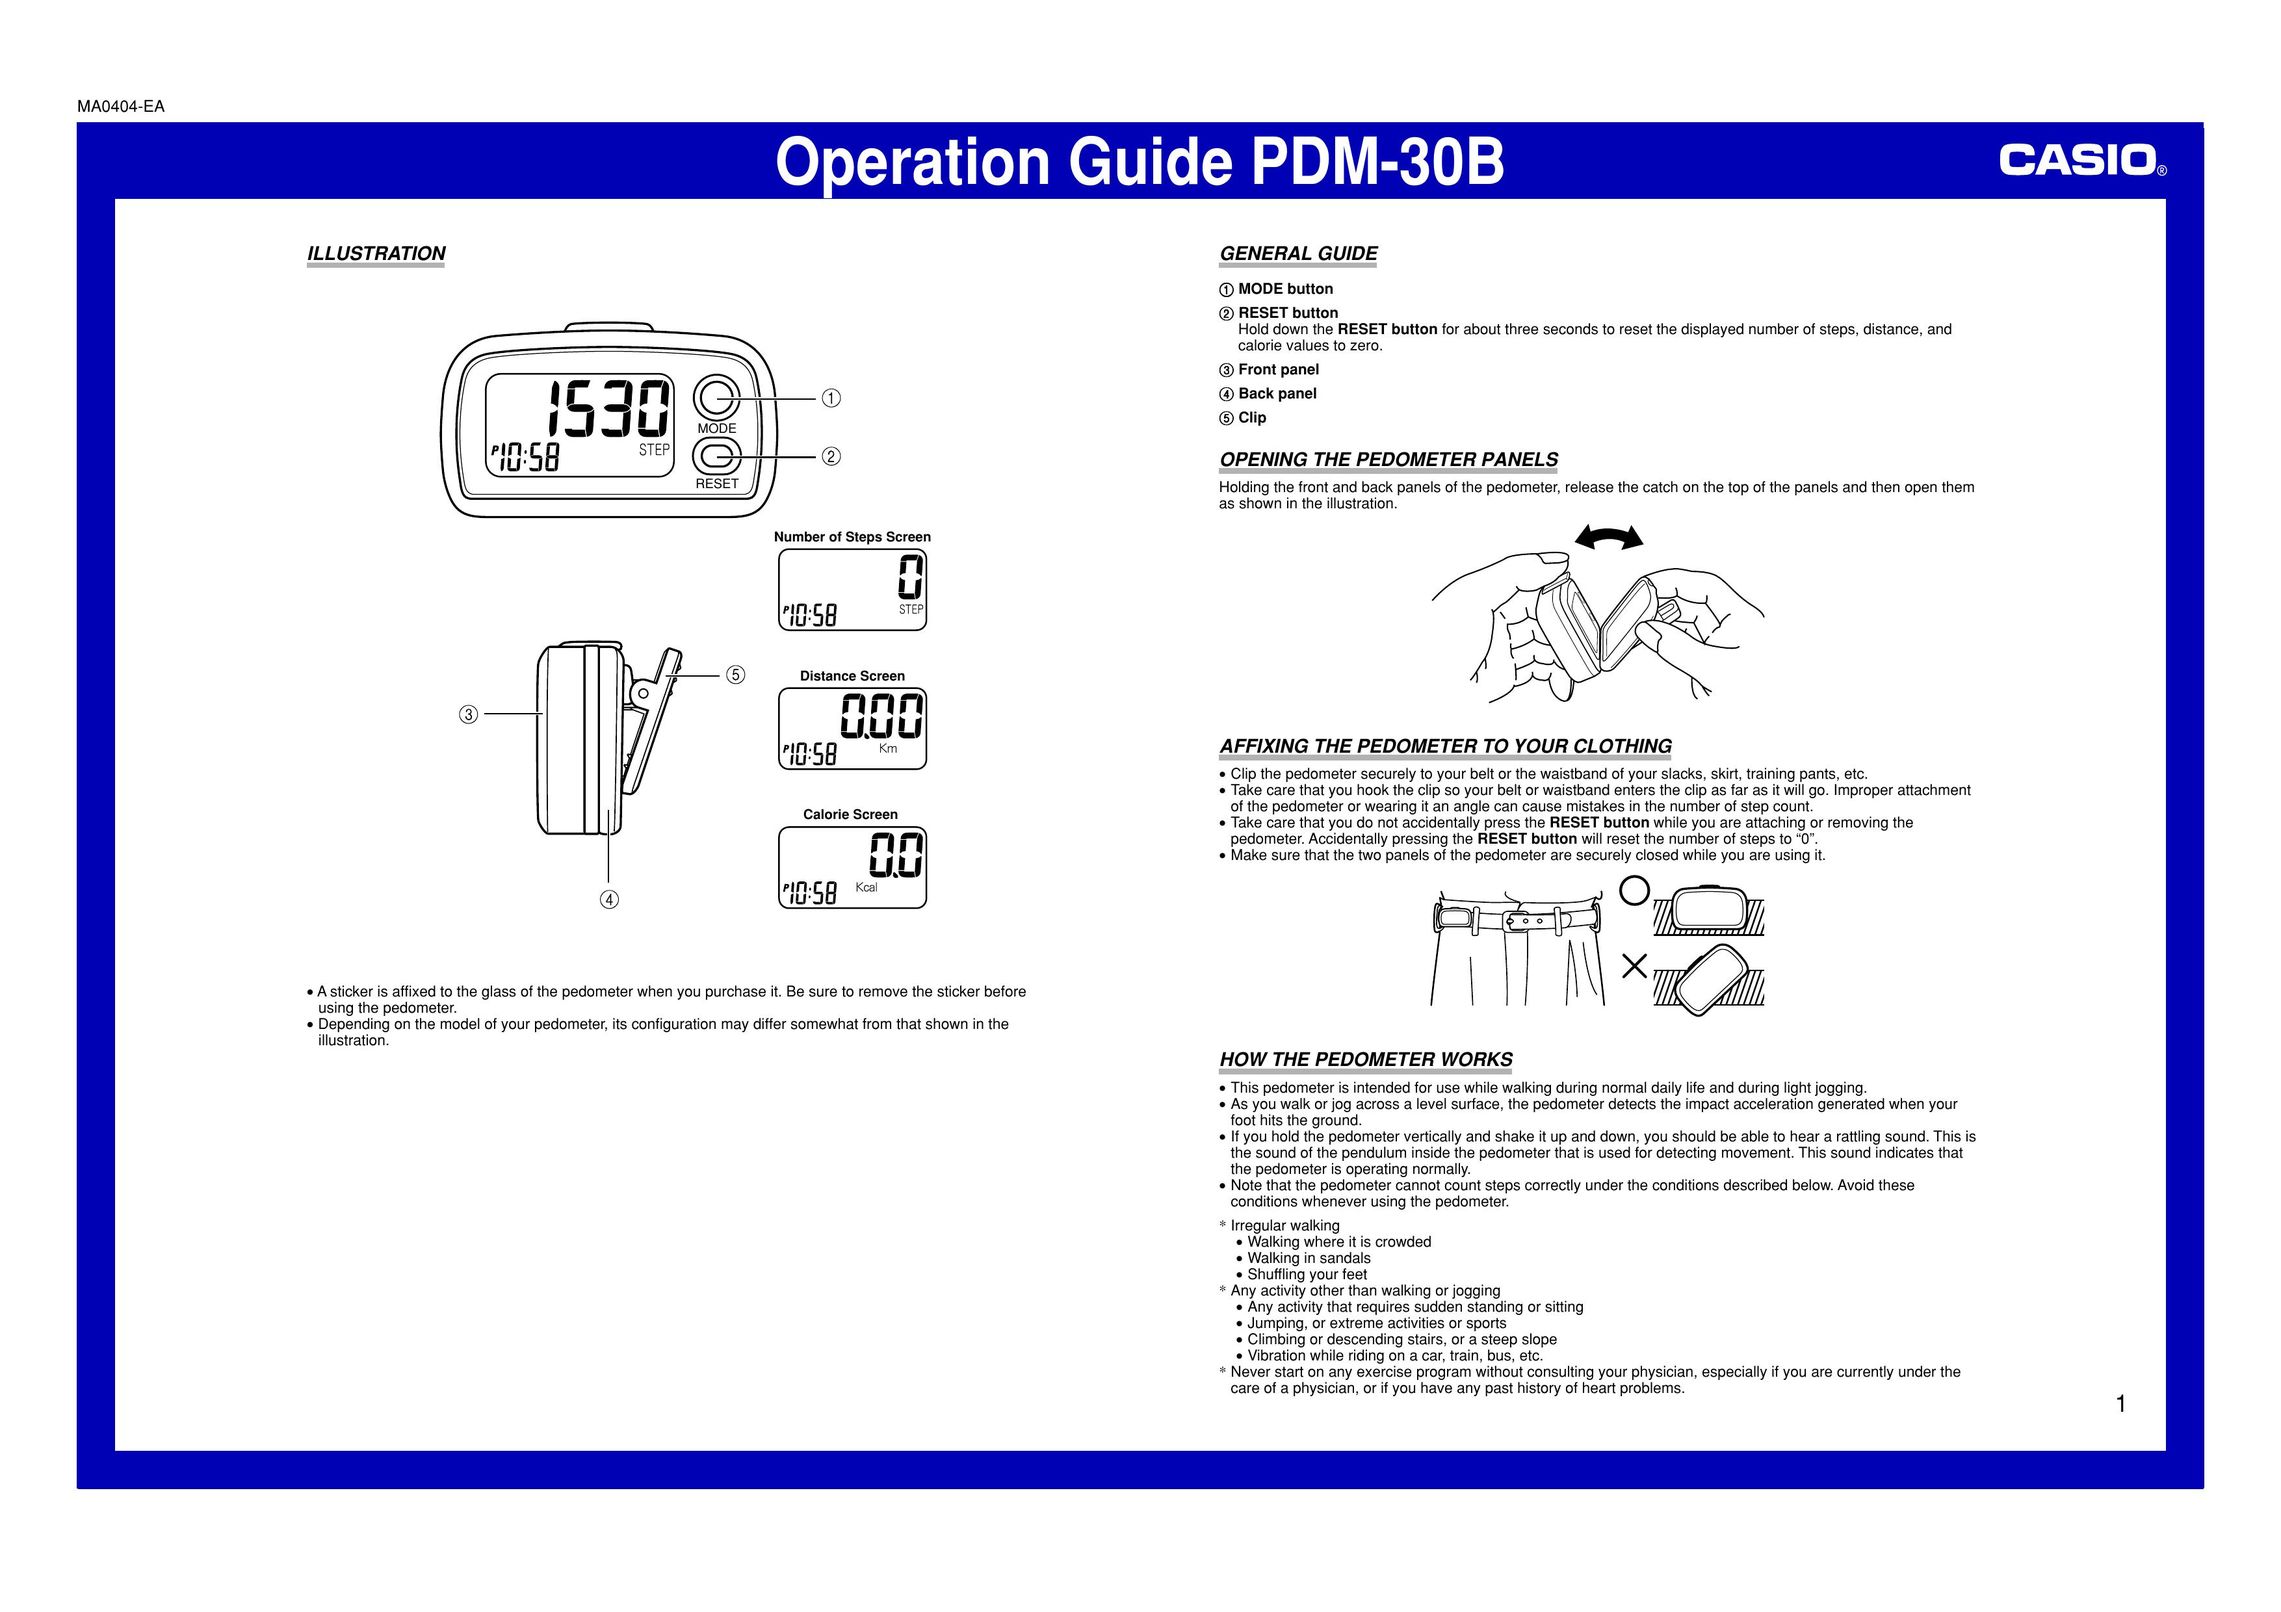 Casio PDM-30B Fitness Electronics User Manual